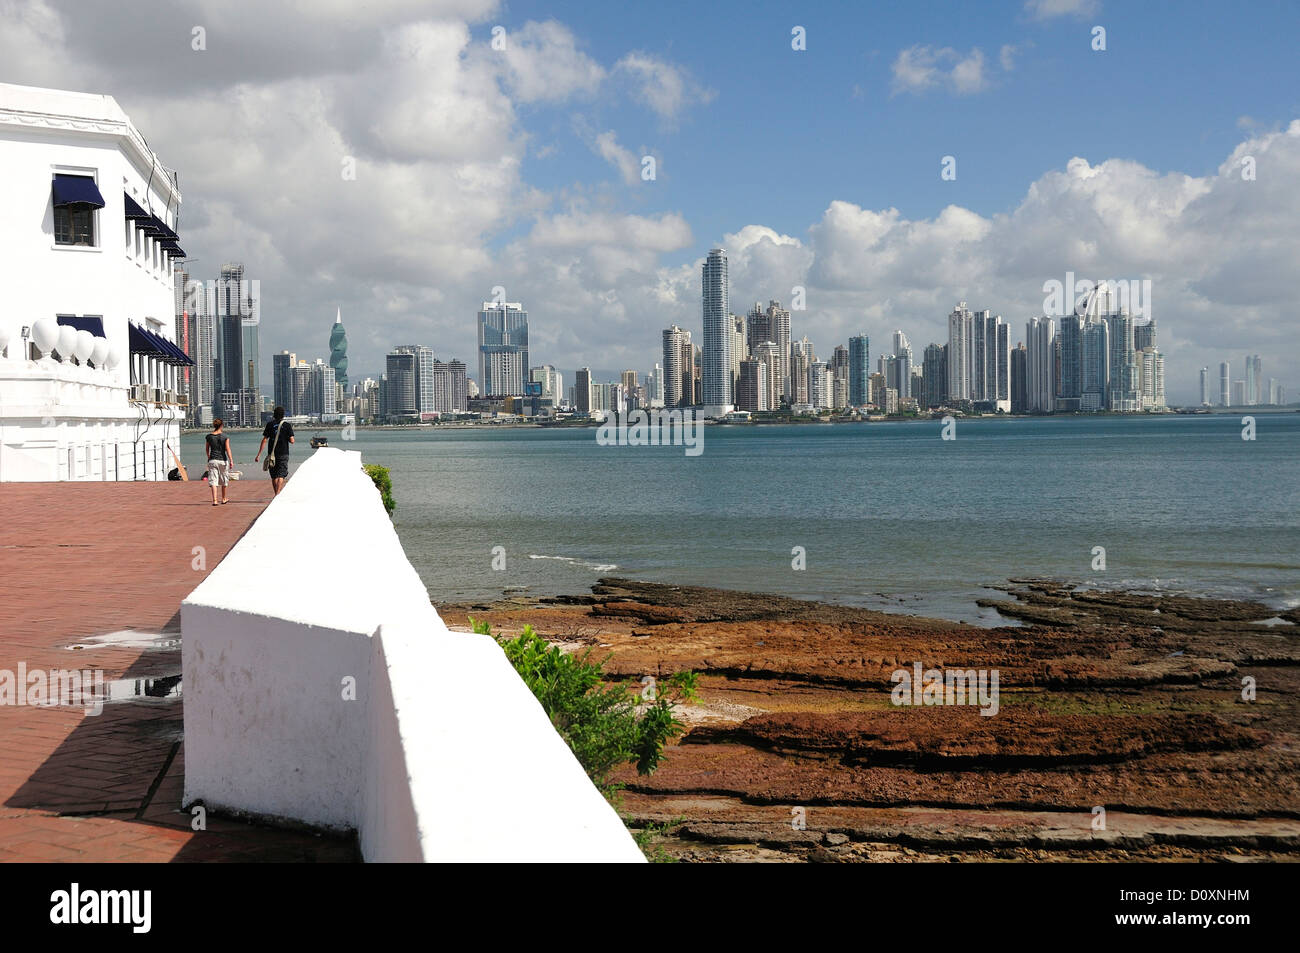 Skyline, Old town, Panama City, Panama, Panama, Central America, town, city Stock Photo